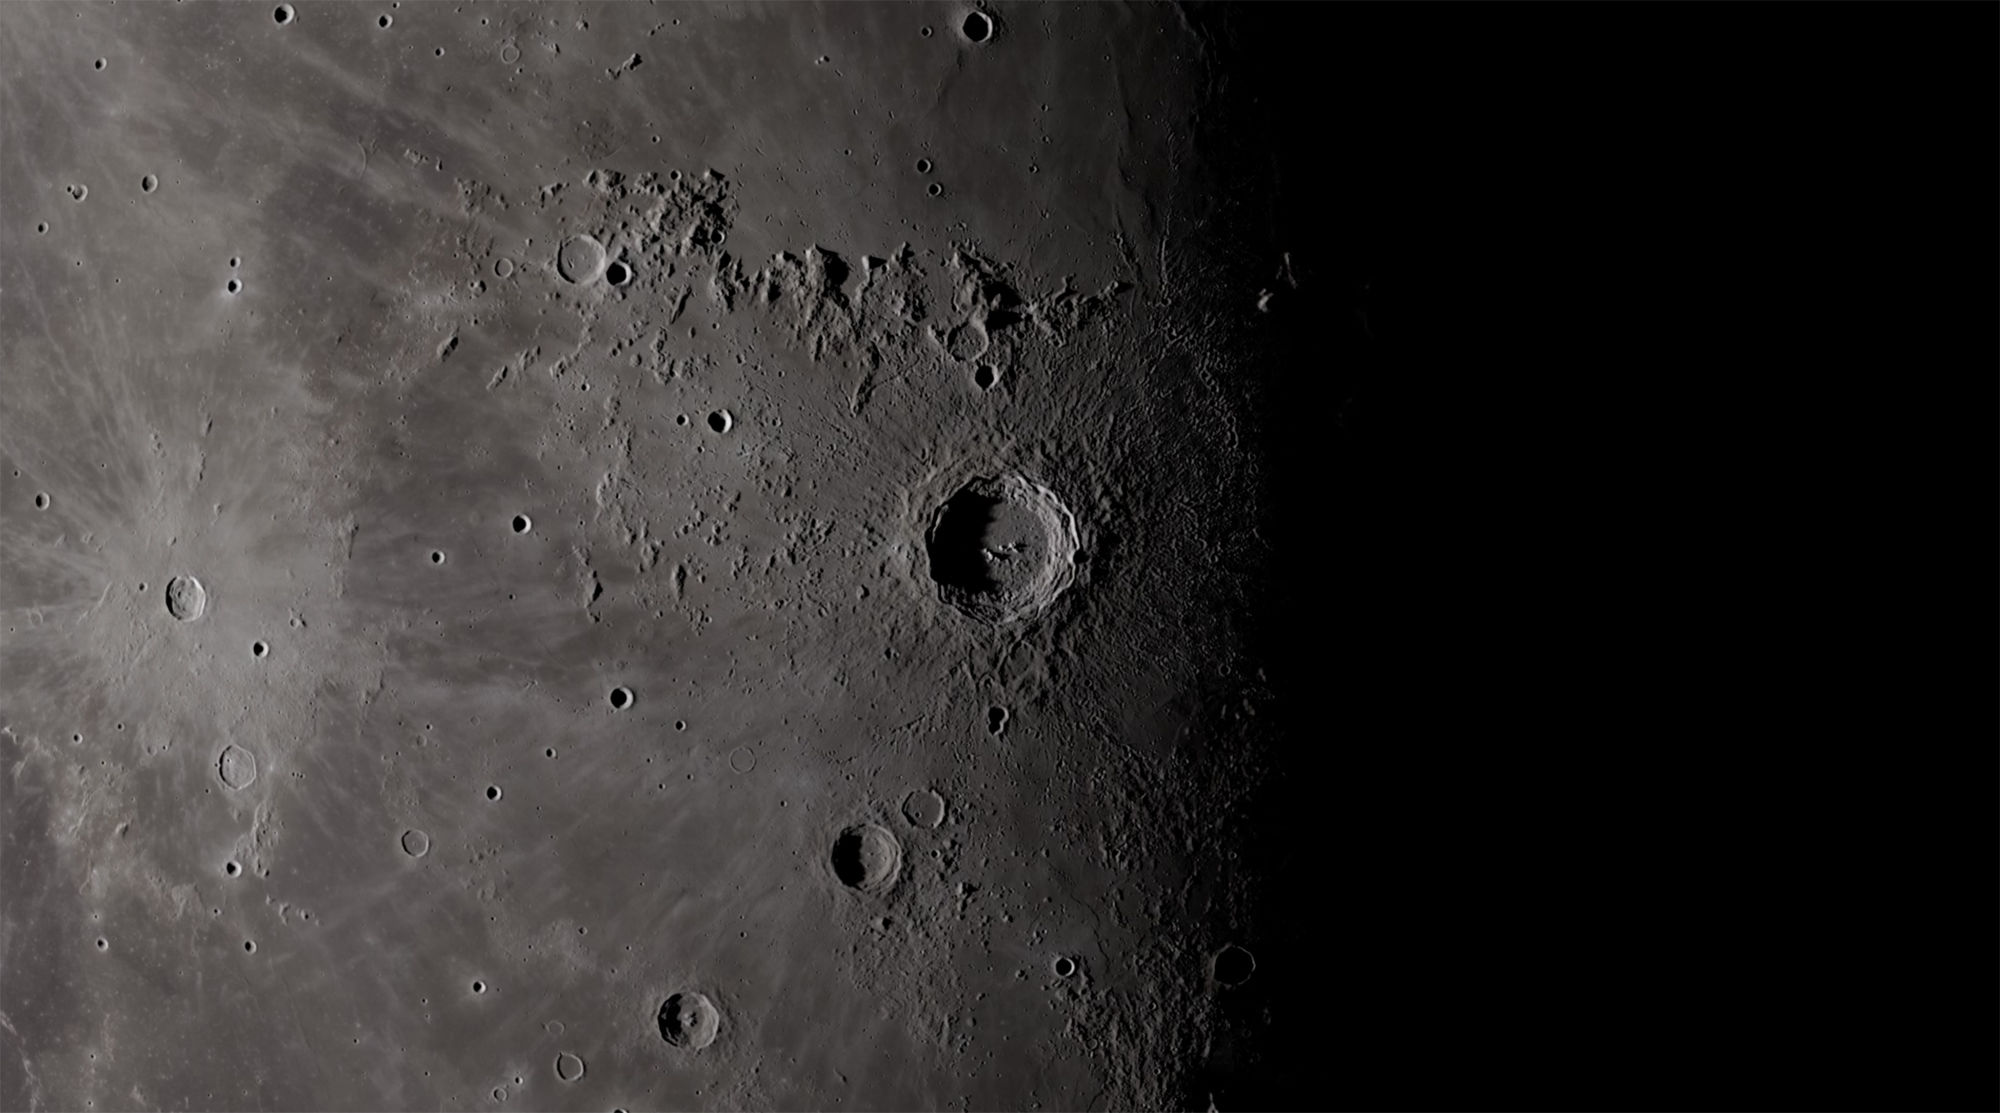 Sunset on the Moon’s crater Copernicus. Credit: NASA/Goddard Space Flight Center’s Scientific Visualization Studio